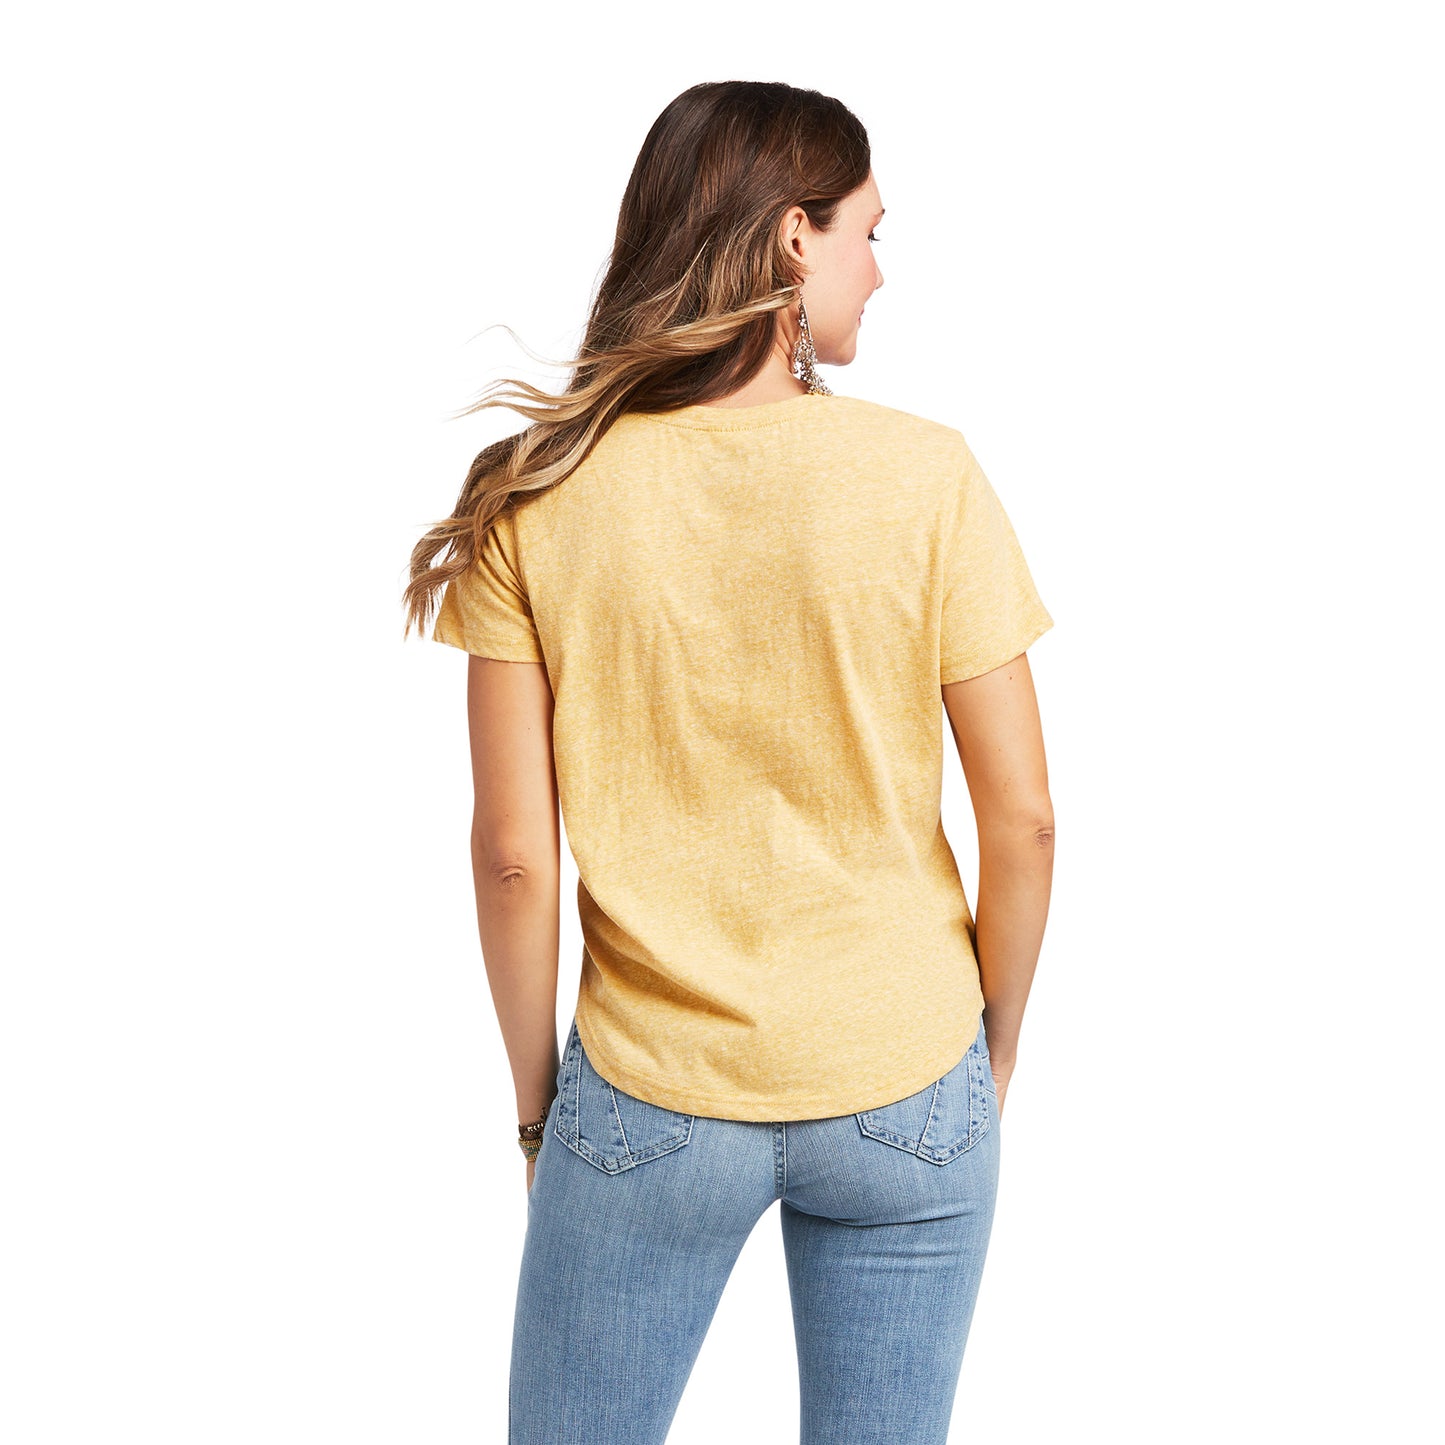 Ariat® Ladies Desert Vibes Symphonic Sunset T-Shirt 10039818